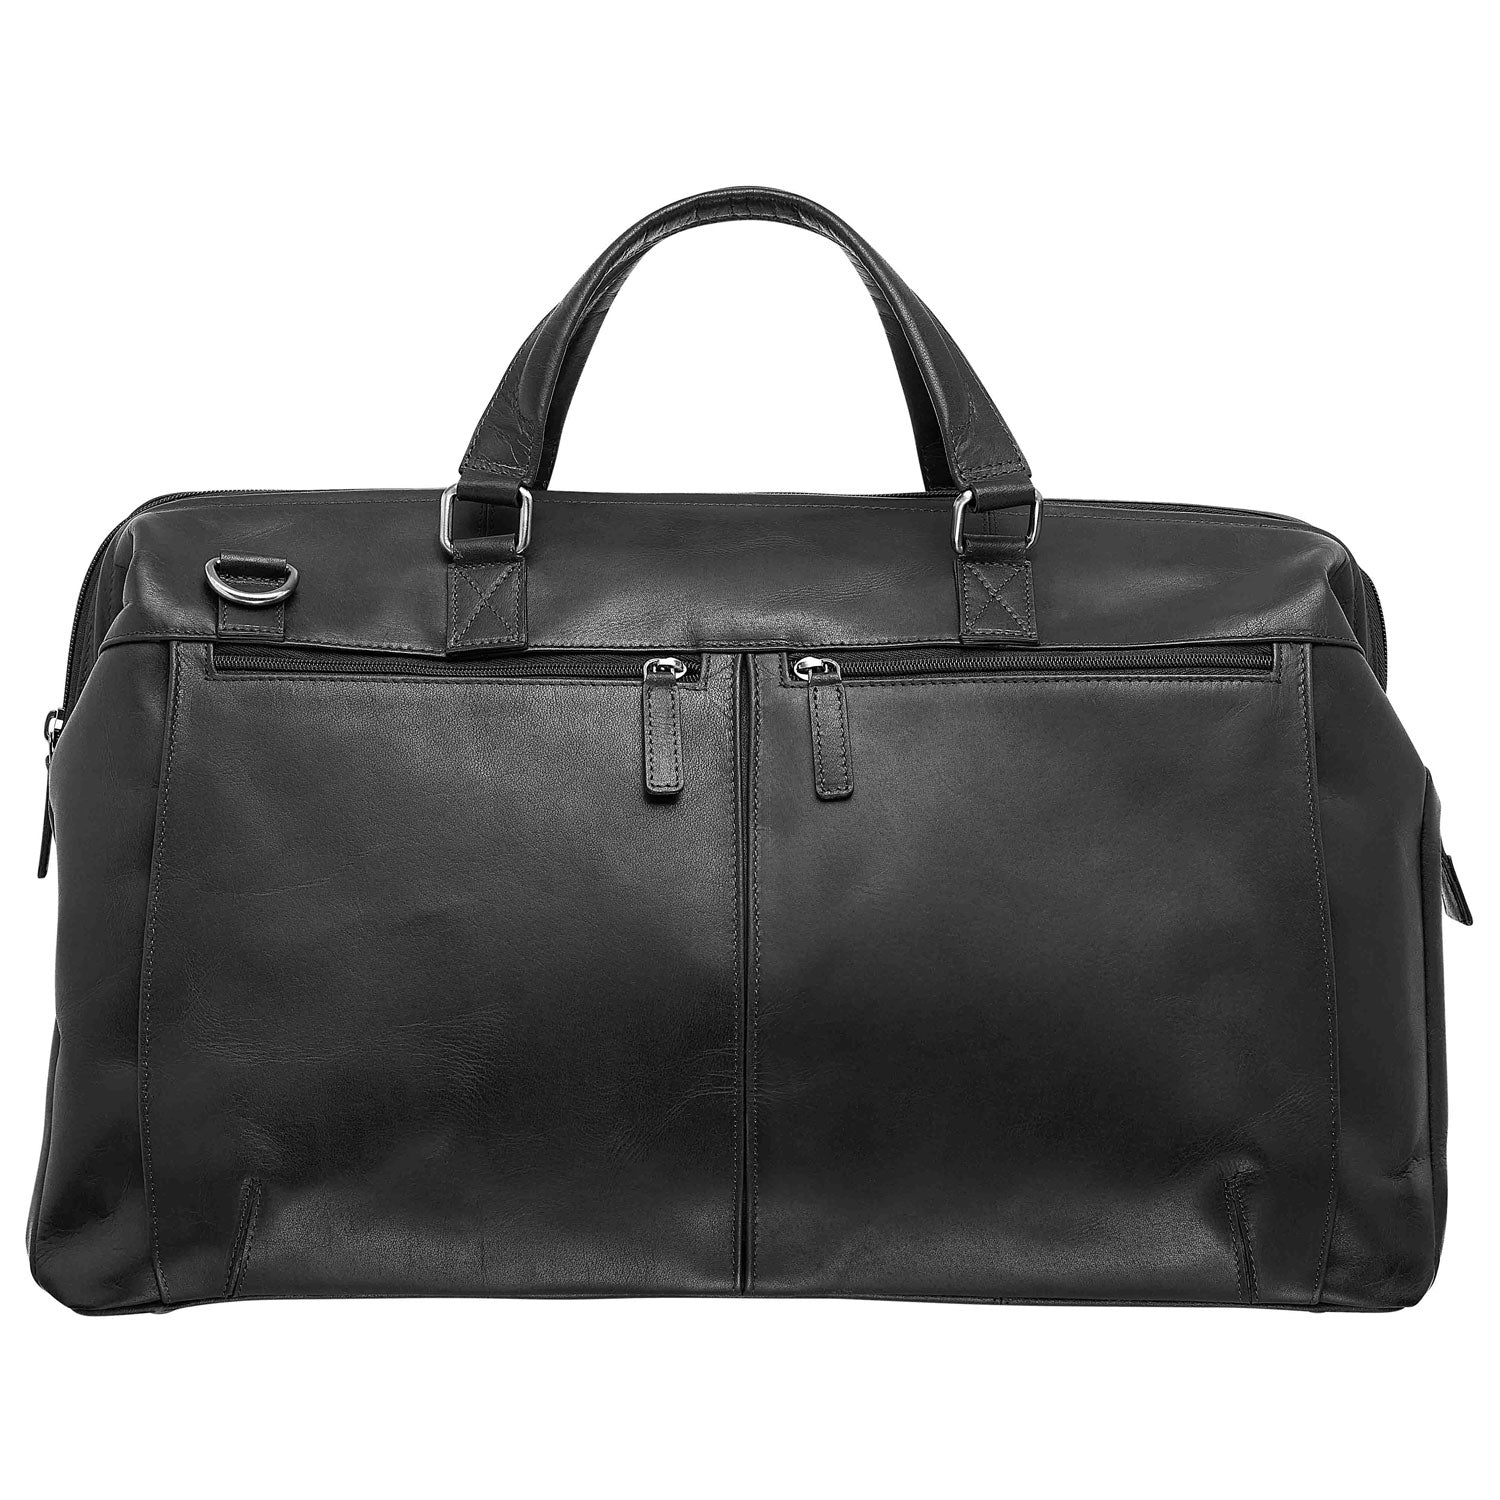 Mancini Leather Classic Carry-on Duffle Bag, 20" x 10" x 13.5", Black